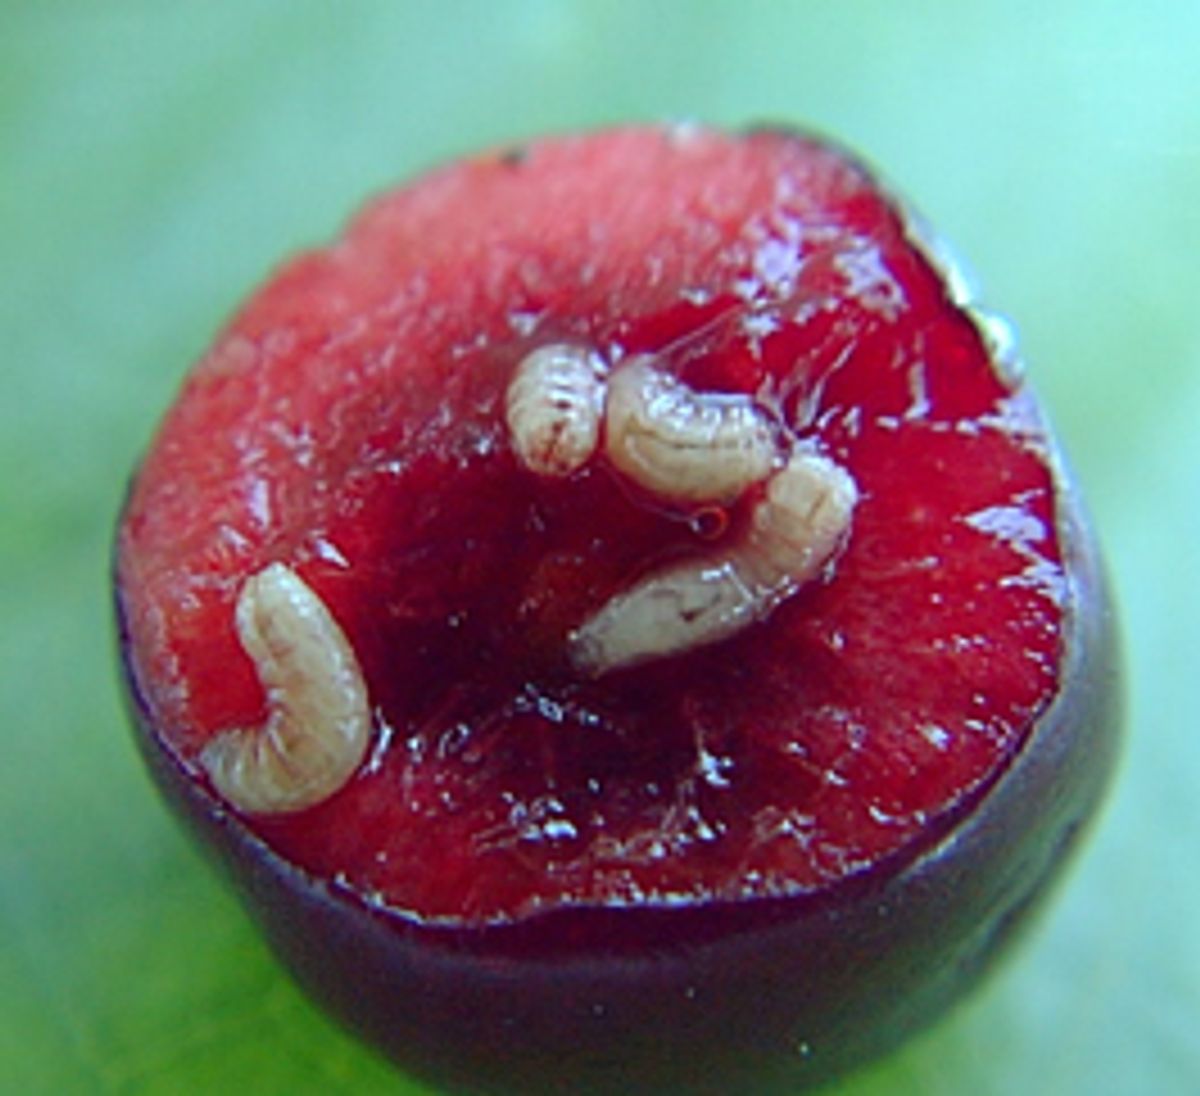  (WSU Tree Fruit website)